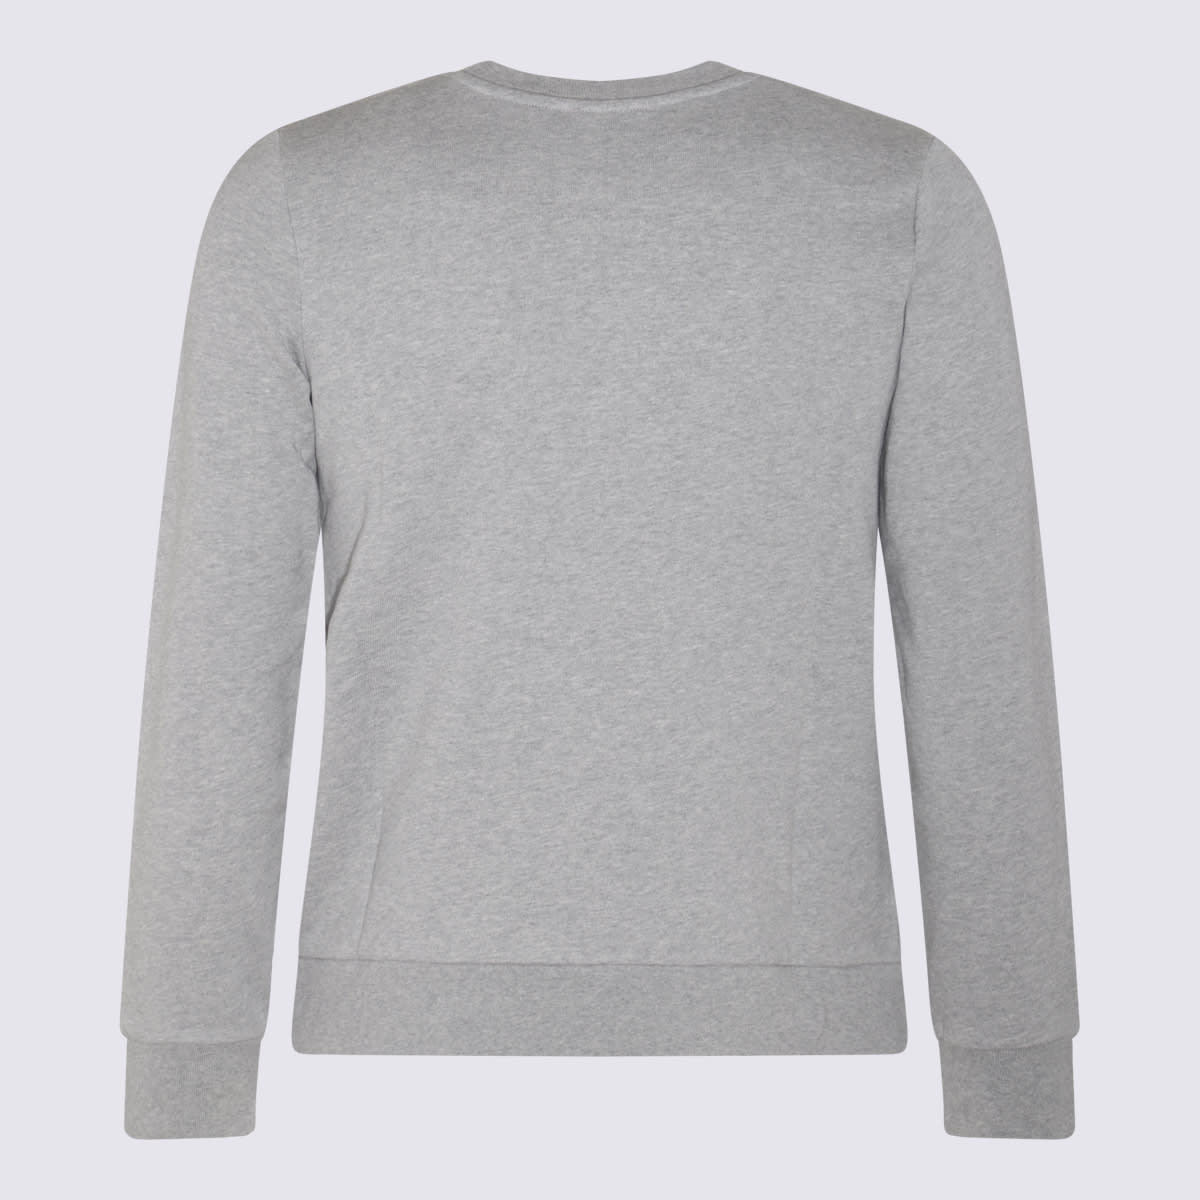 Apc Hathered Grey Cotton Sweatshirt